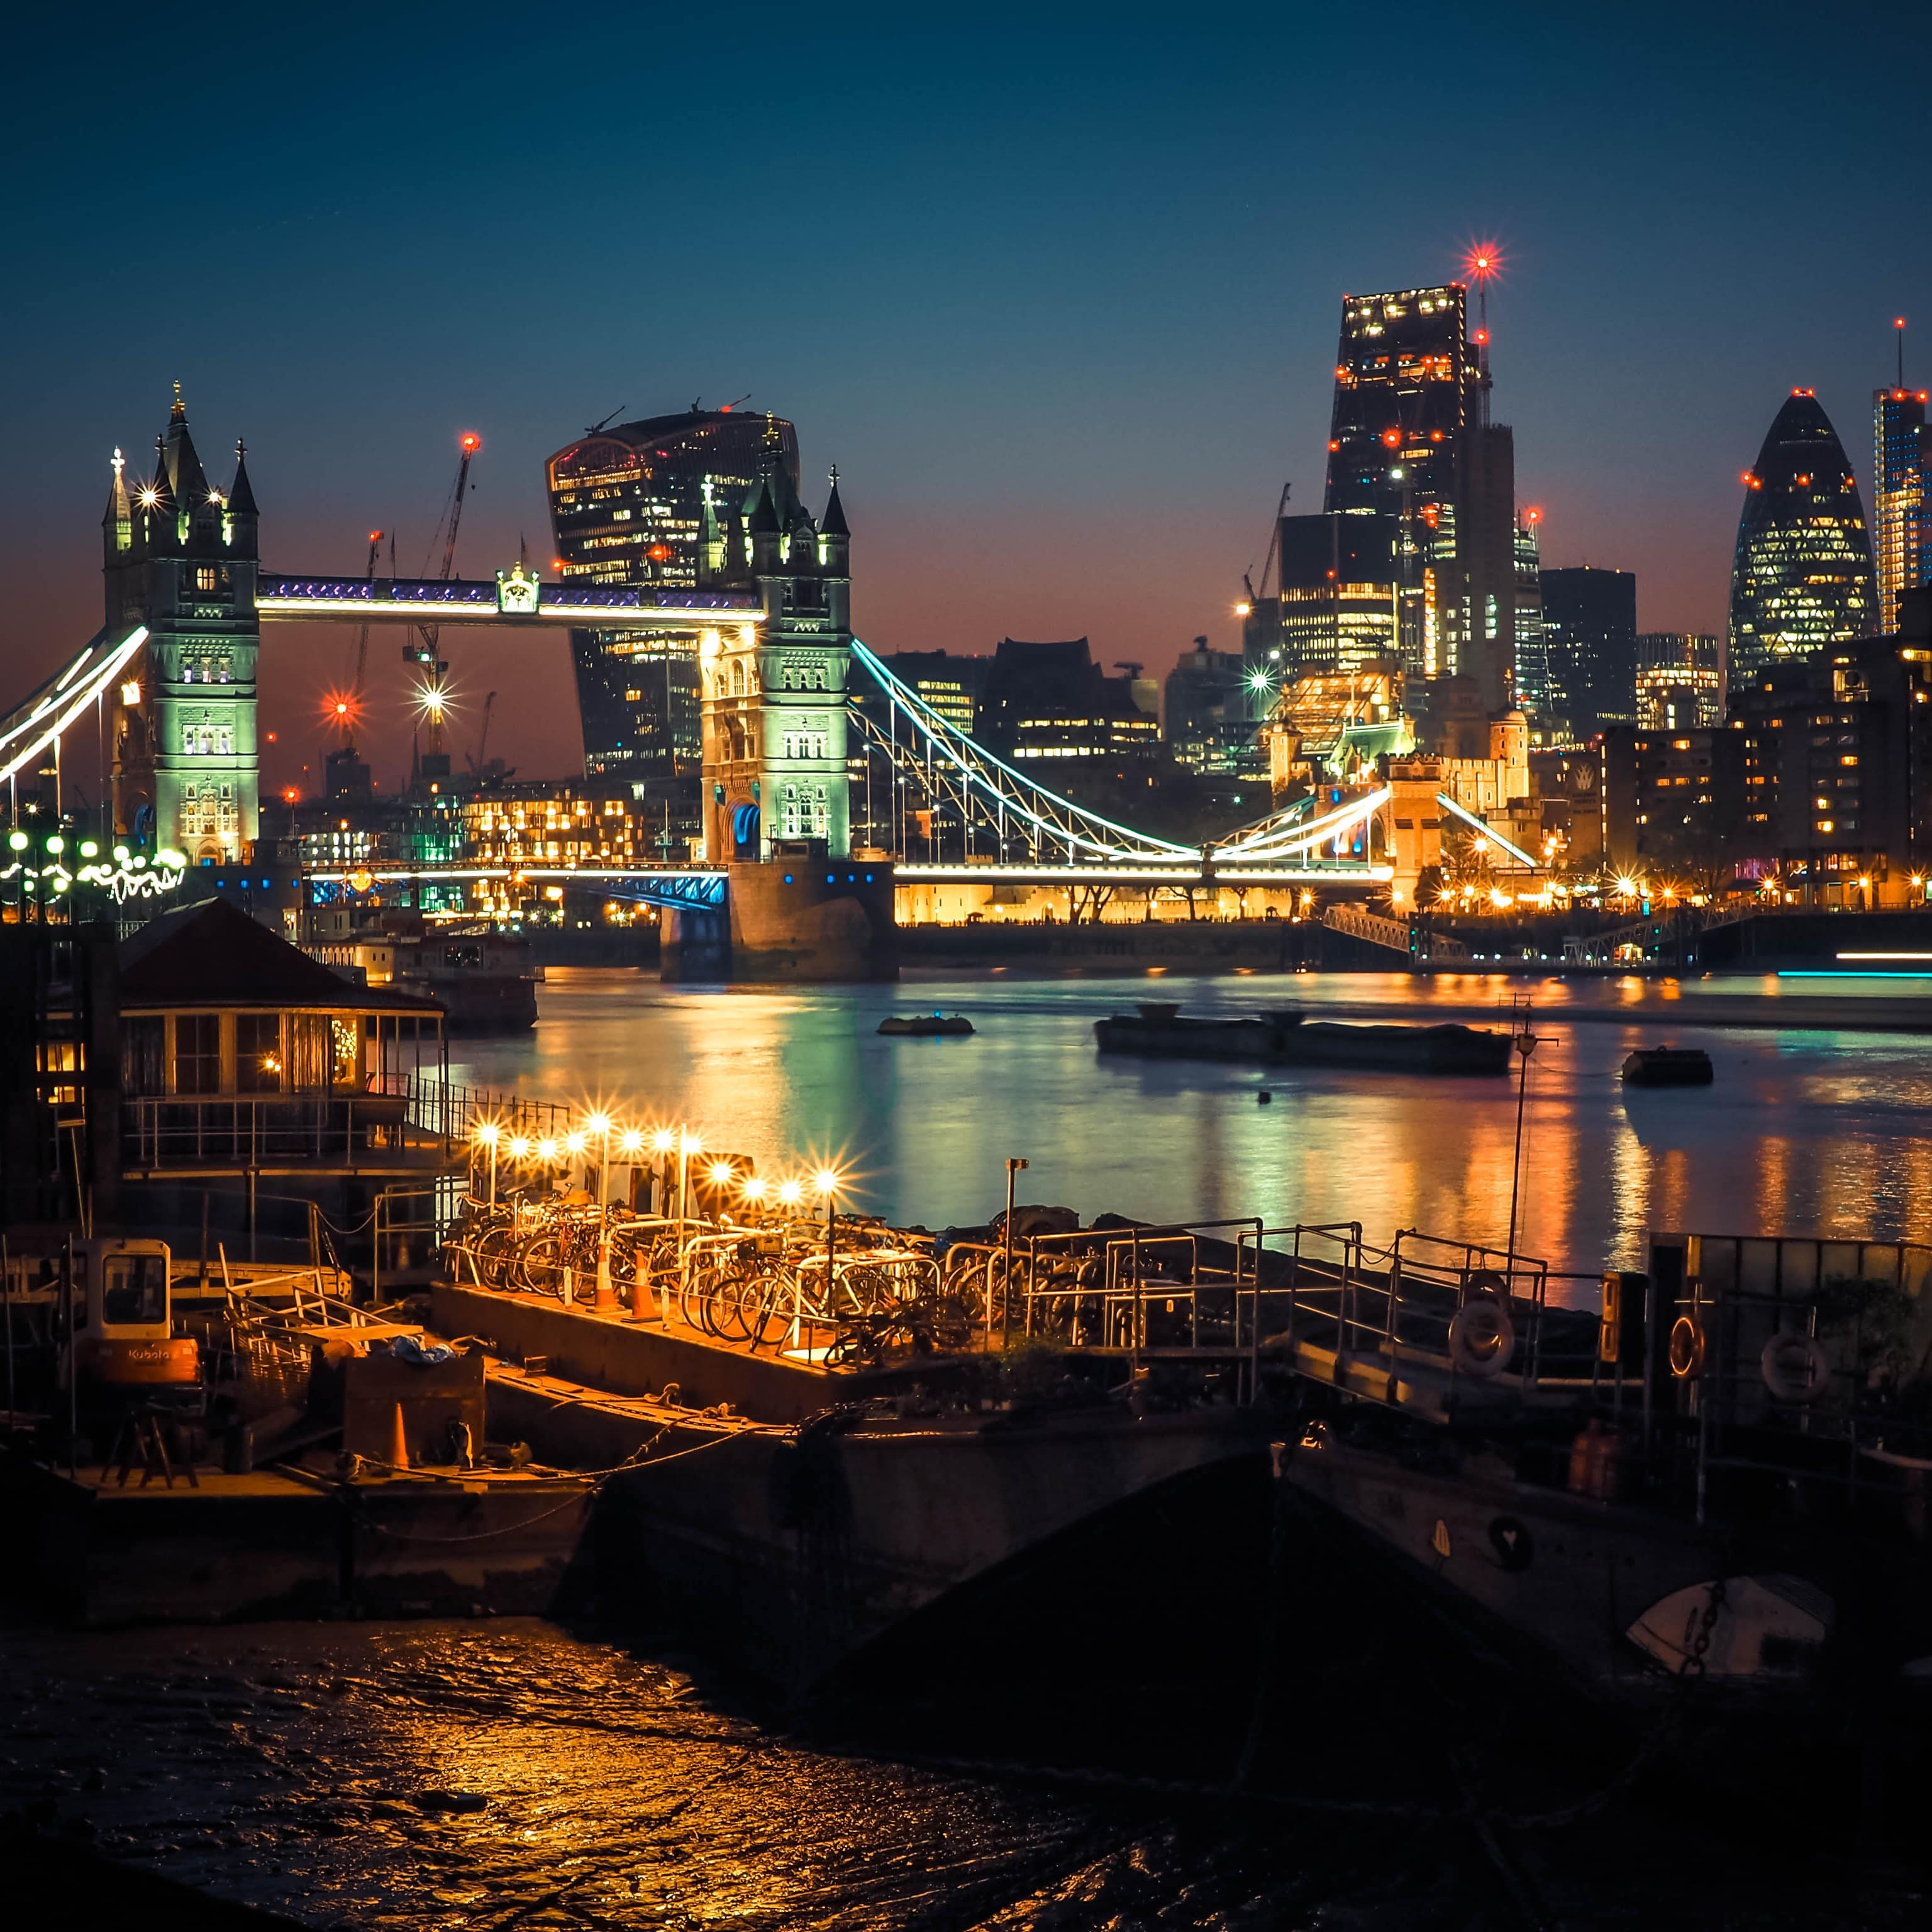 London’s Tower Bridge and River Thames at night